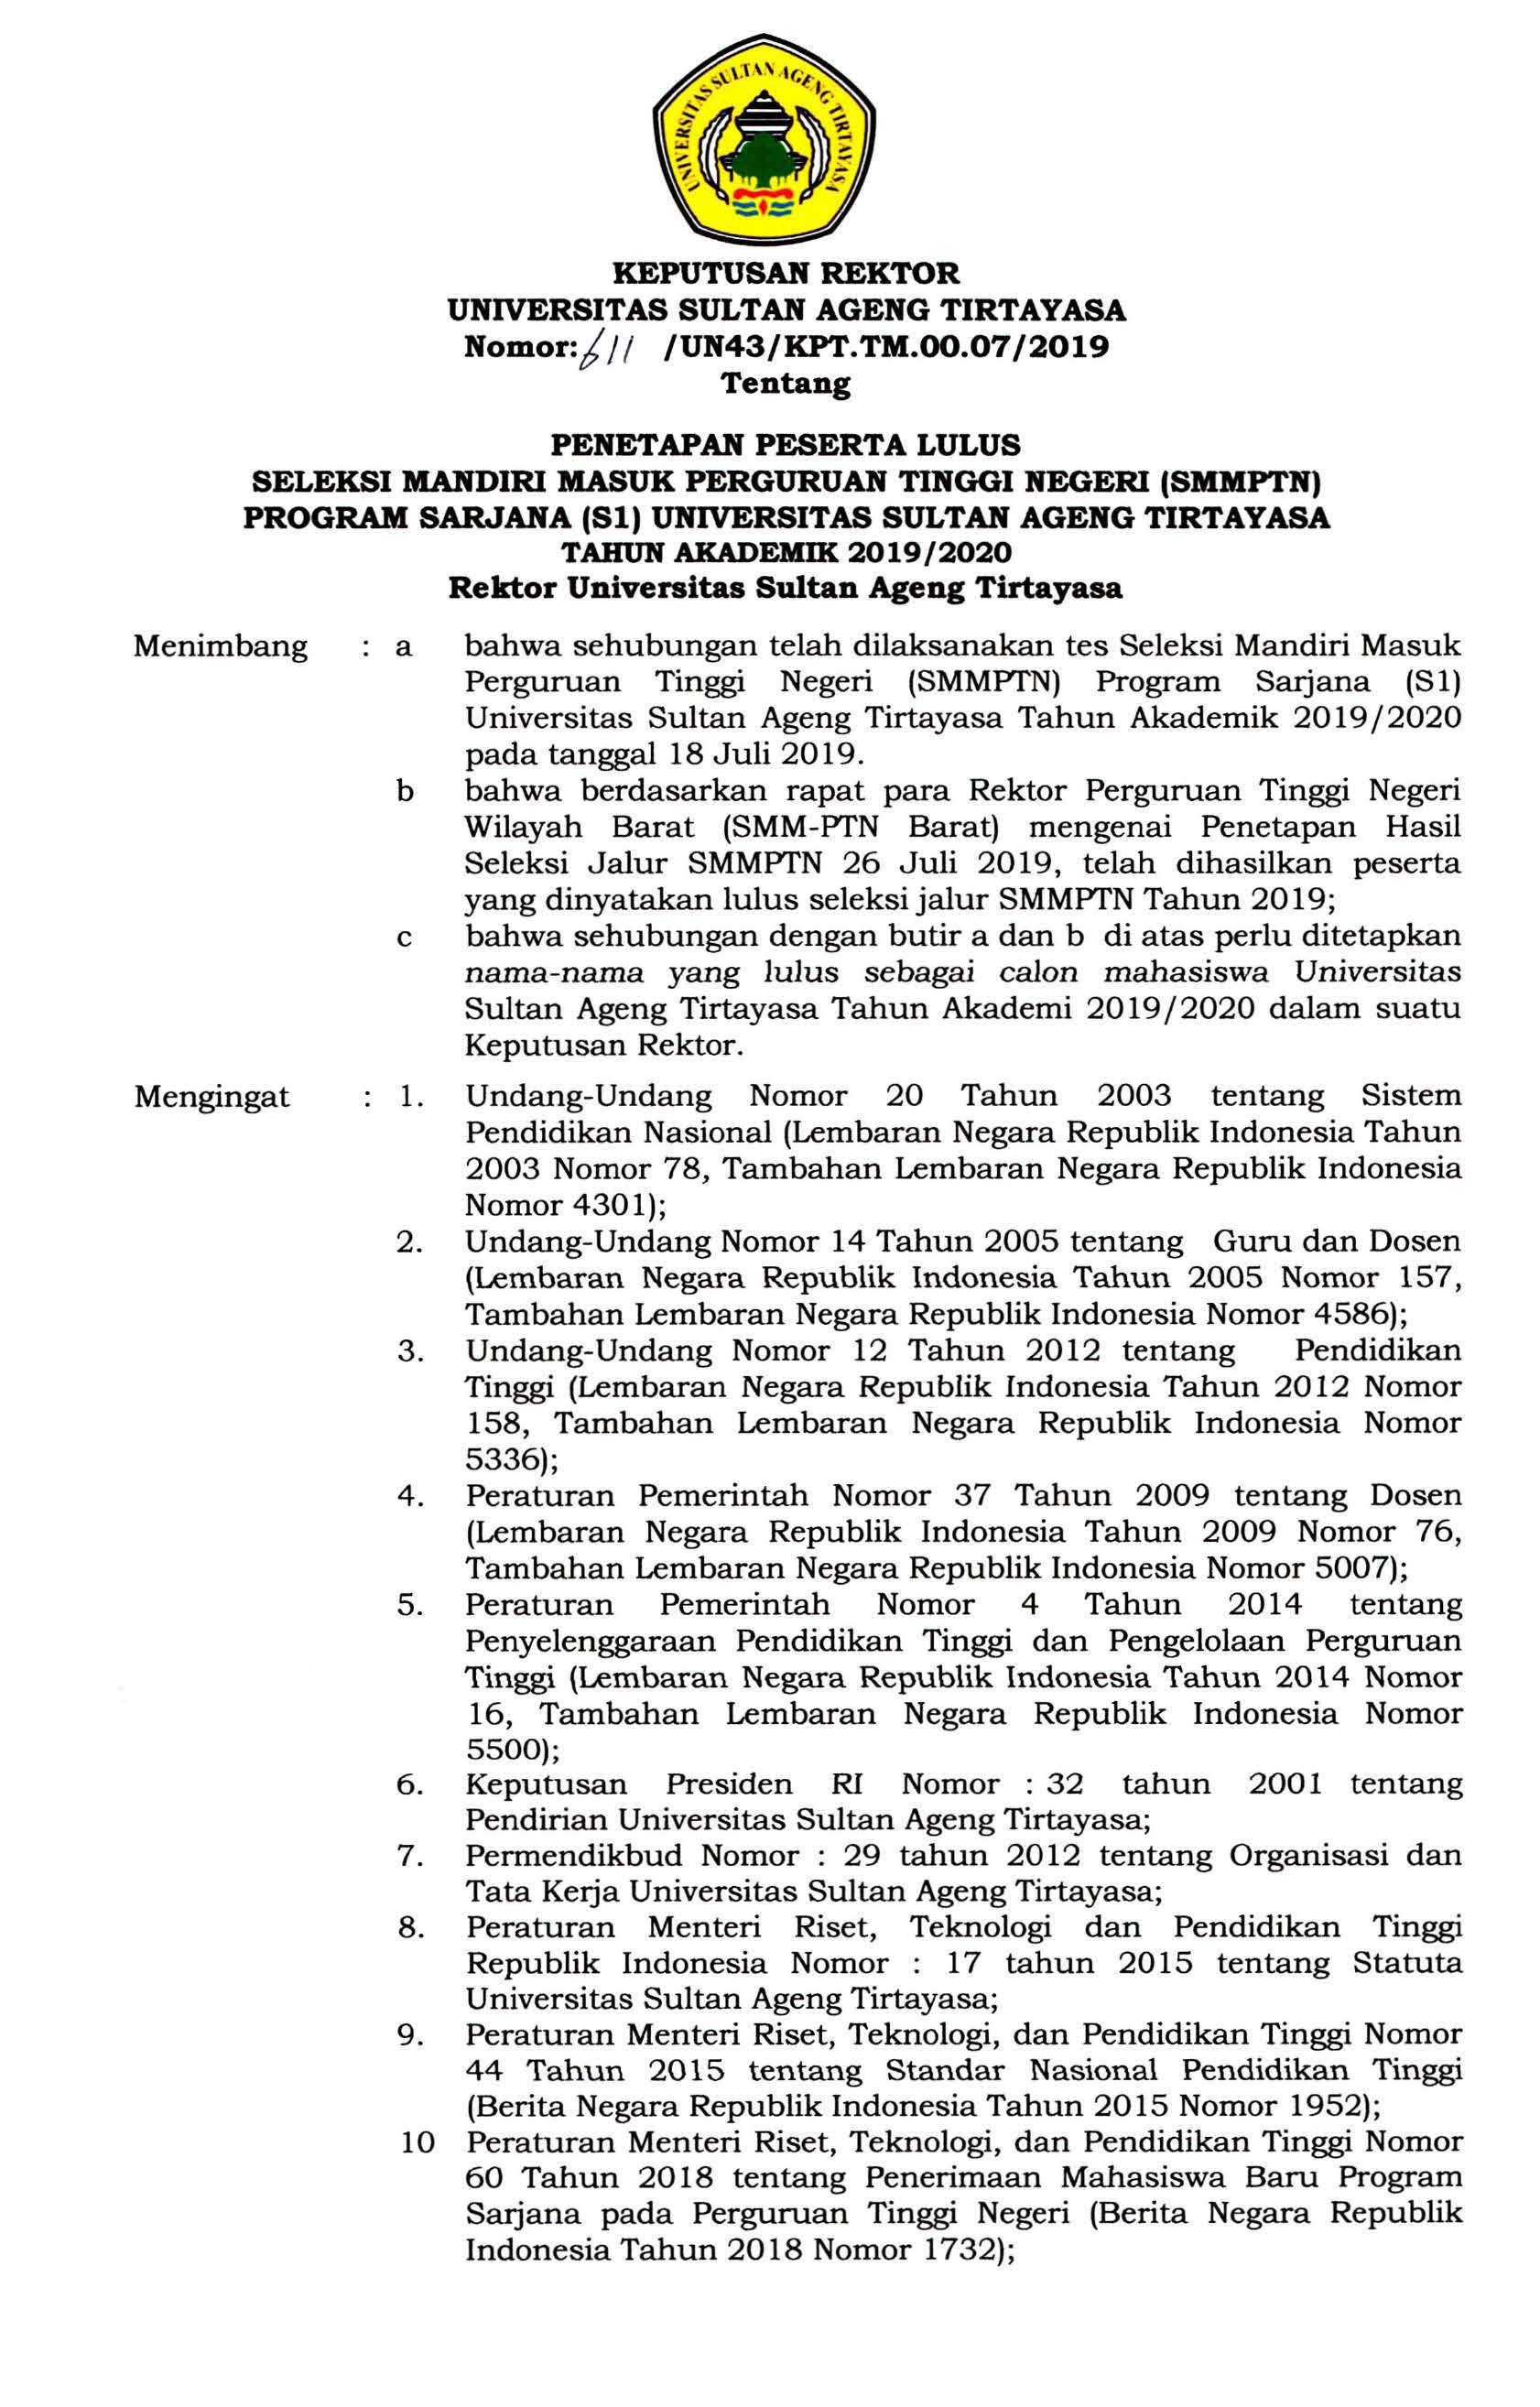 Penetapan Peserta Lulus SMMPTN Program Sarjana (S1) Universitas Sultan Ageng Tirtayasa